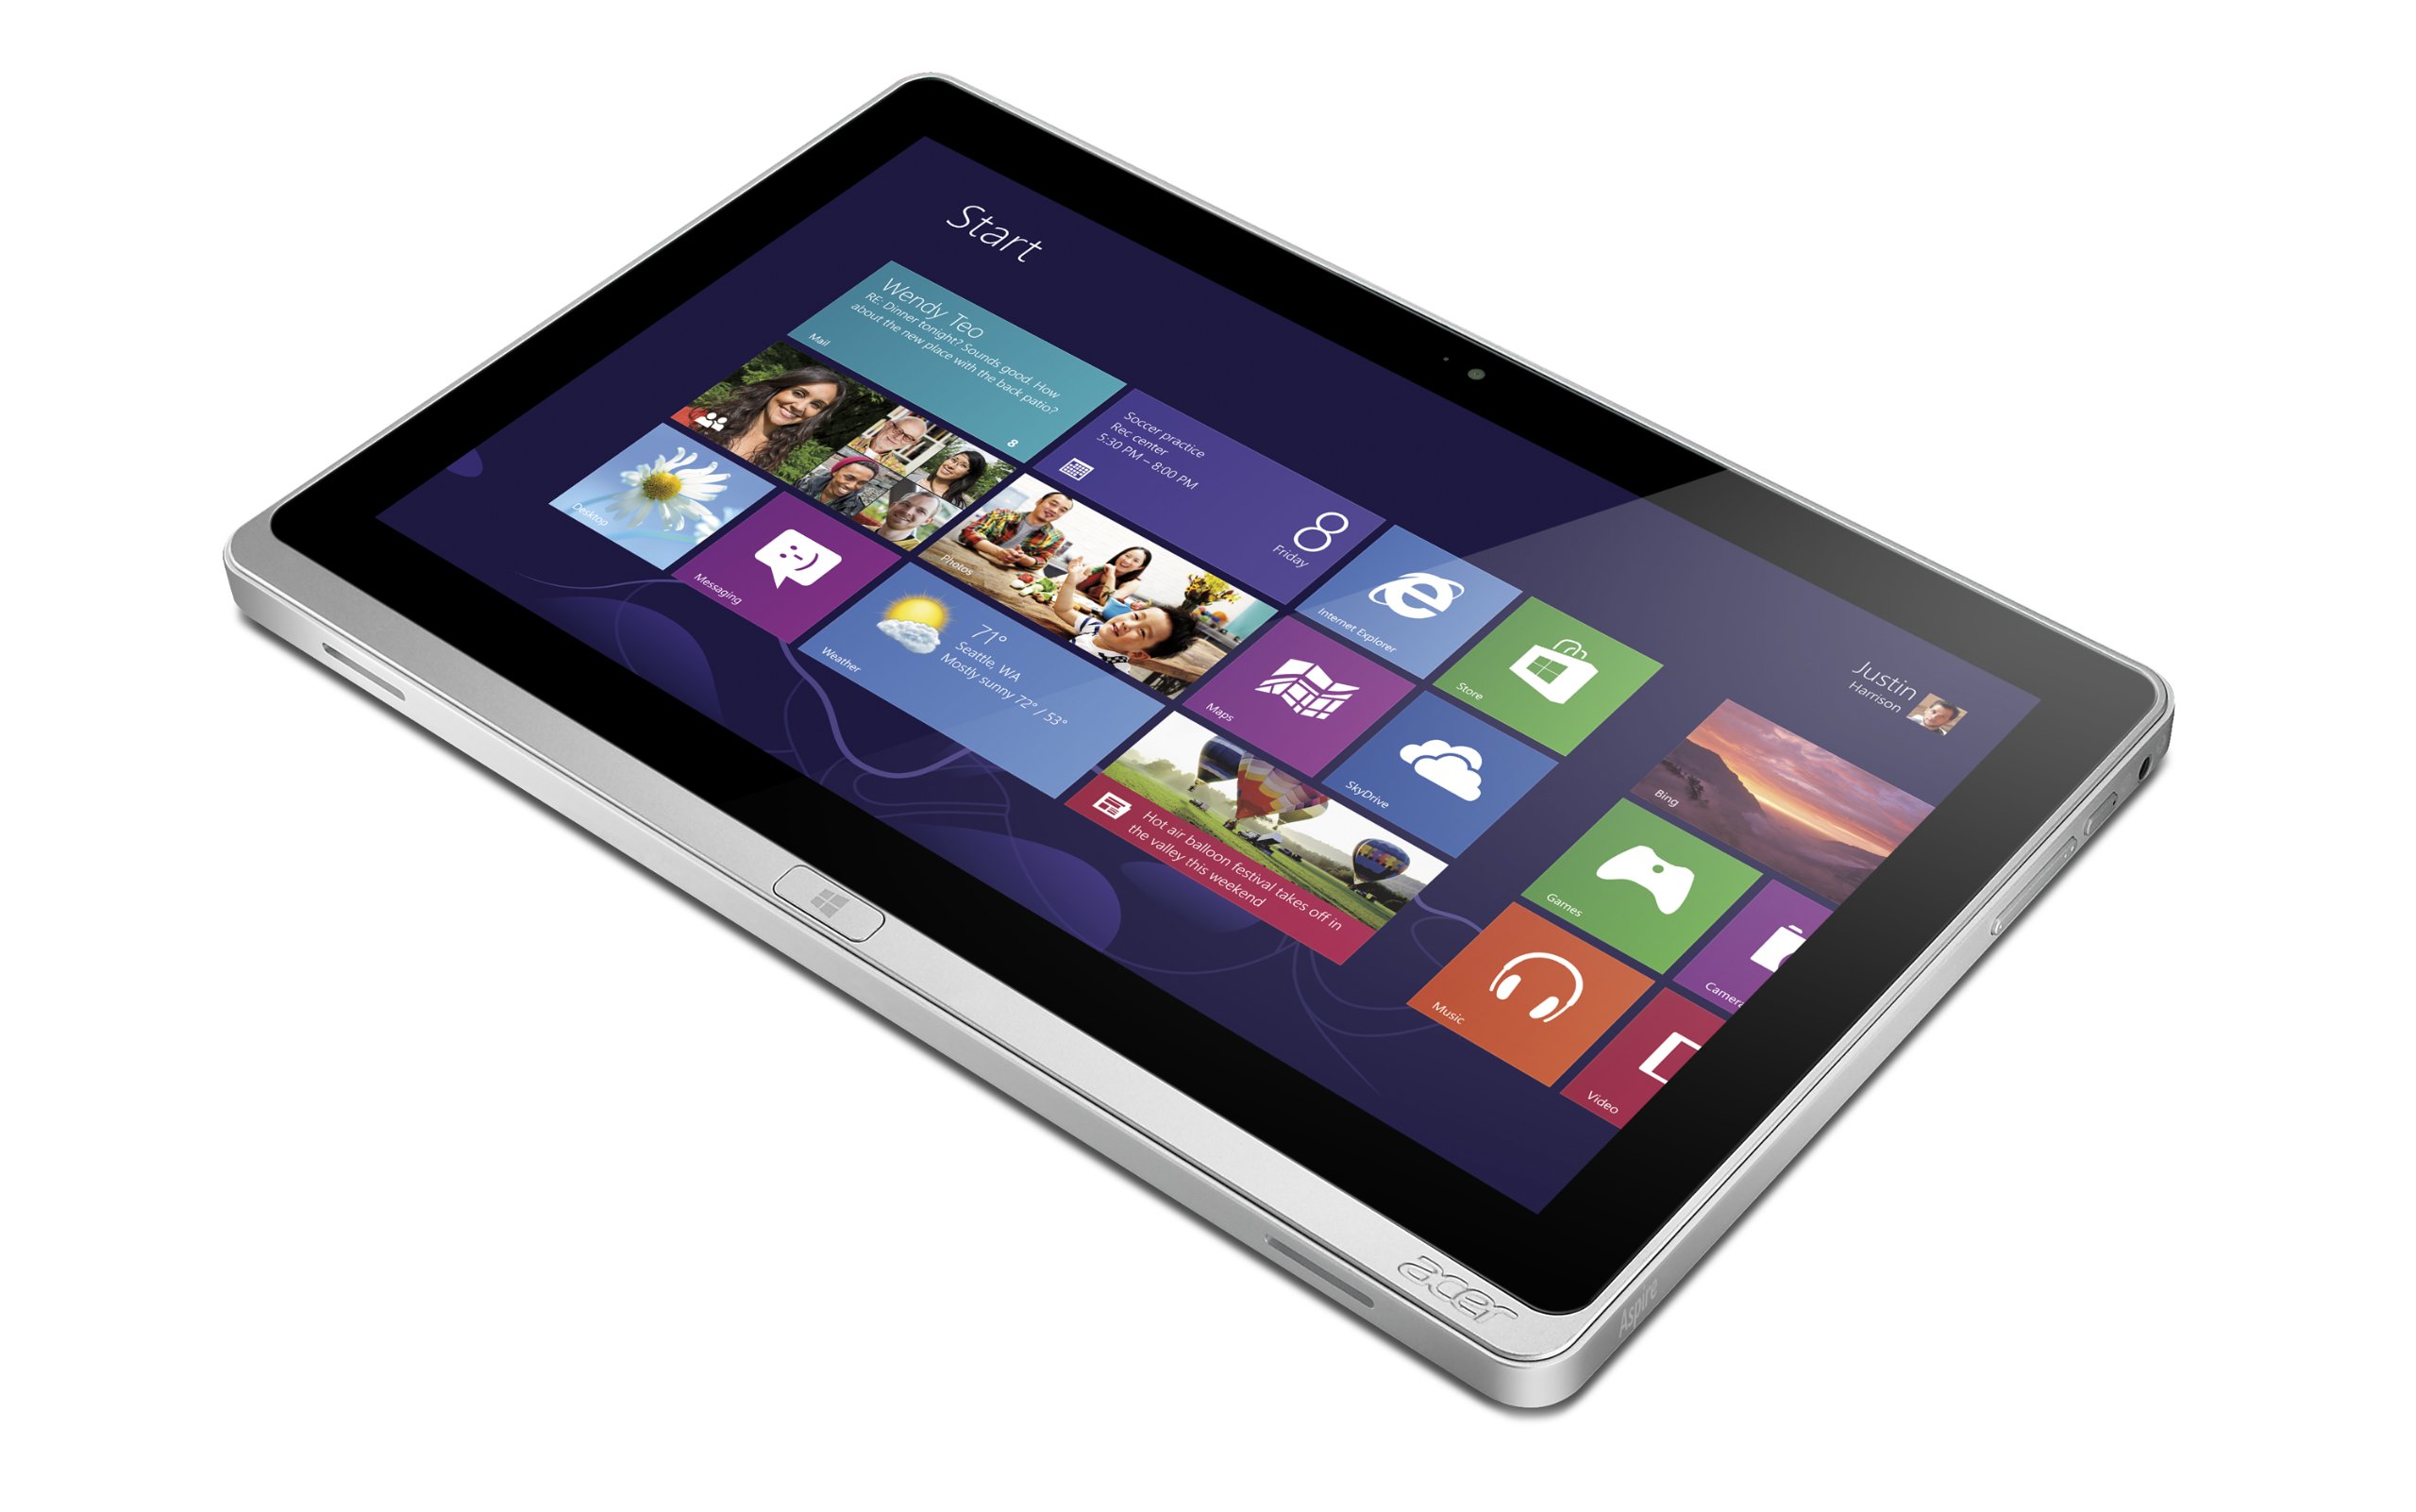 Acer Aspire P3-171-6820 Detachable 2 in 1 Touchscreen Ultrabook (Windows 8, Intel Core i5-3339Y 1.5 GHz, 11.6" LED-lit Screen, Storage: 120 GB, RAM: 4 GB) Silver